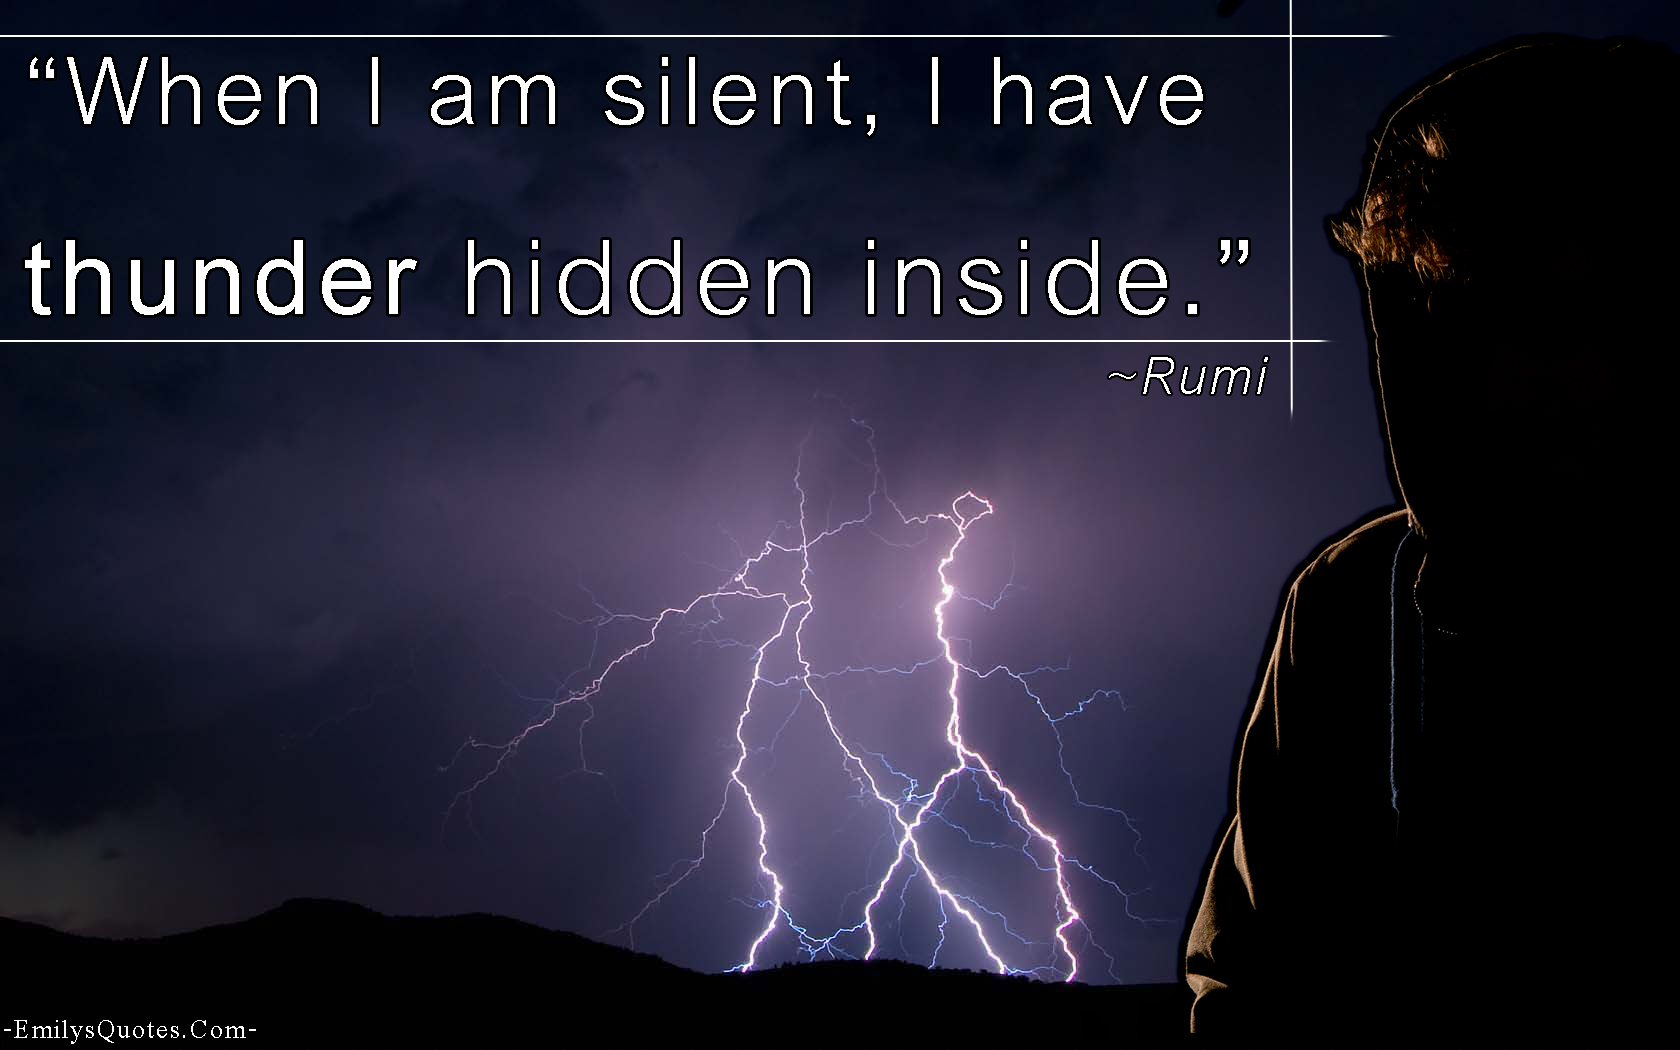 When I am silent, I have thunder hidden inside